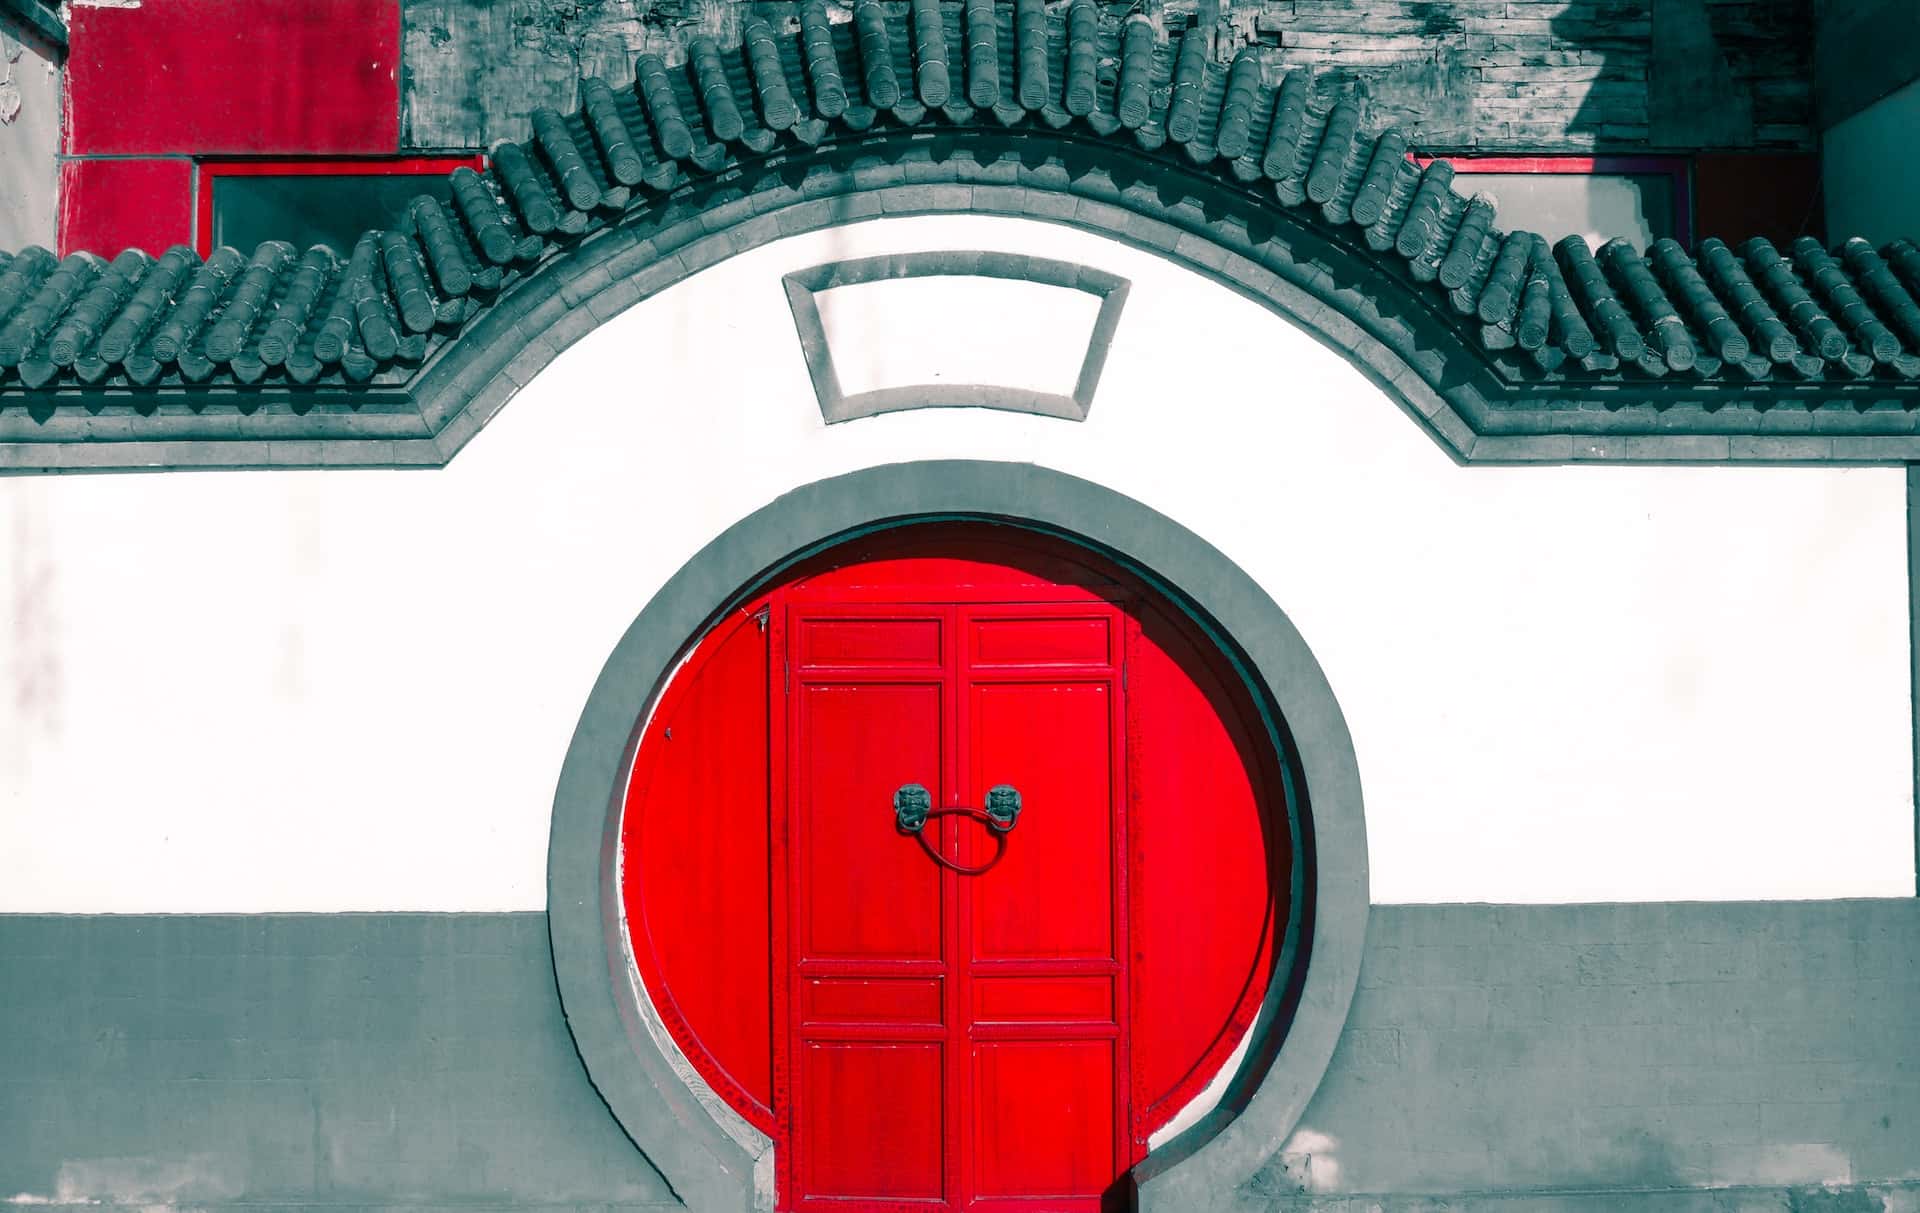 eye-catching red round door